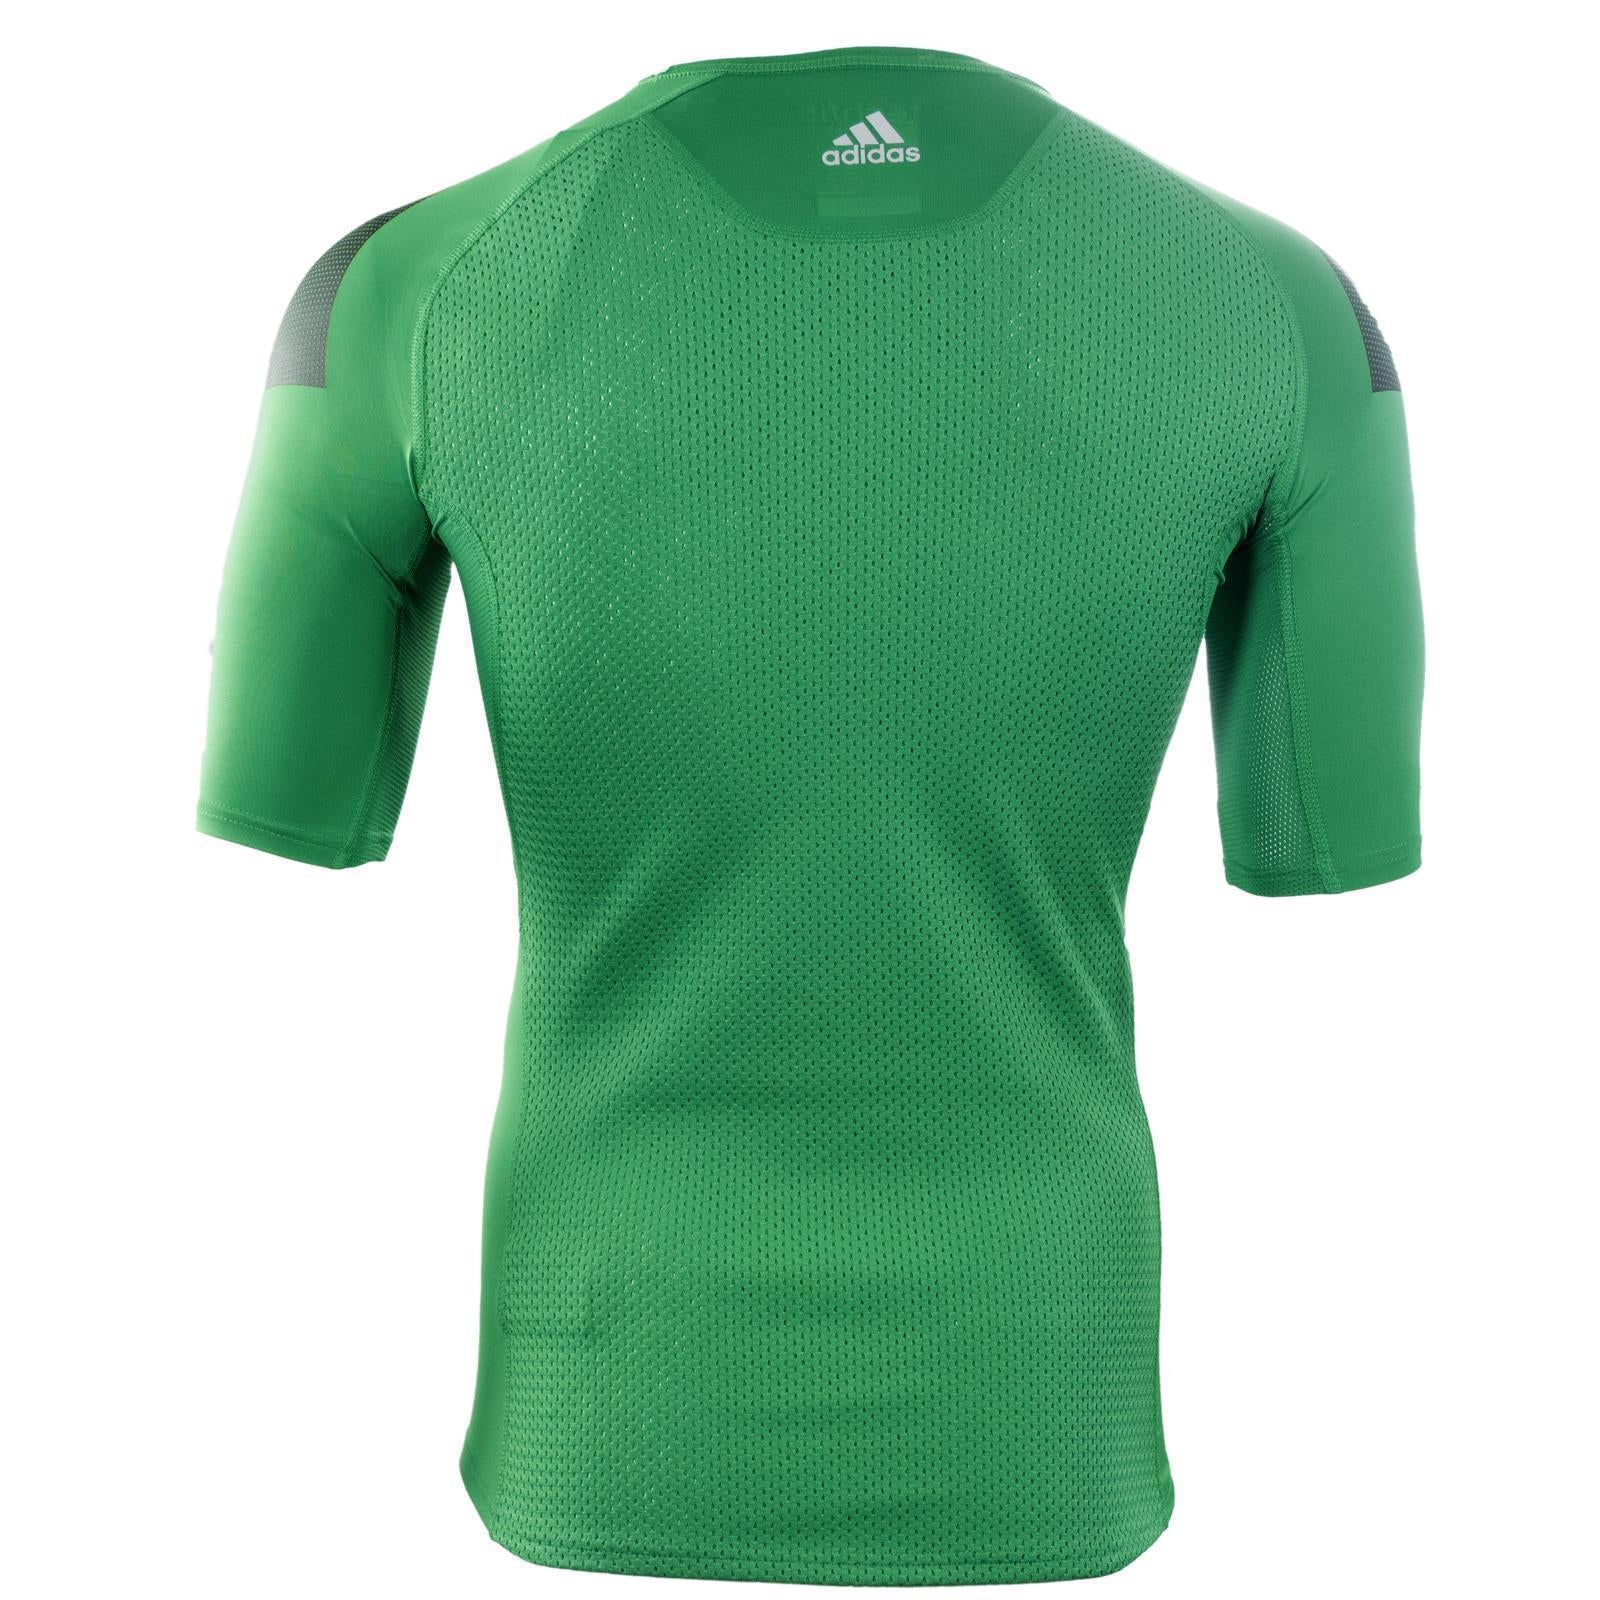 Adidas Techfit Cool T-Shirt Herren Sportshirt Funktion Grün S18406 - Brand Dealers Arena e.K. - BDA24